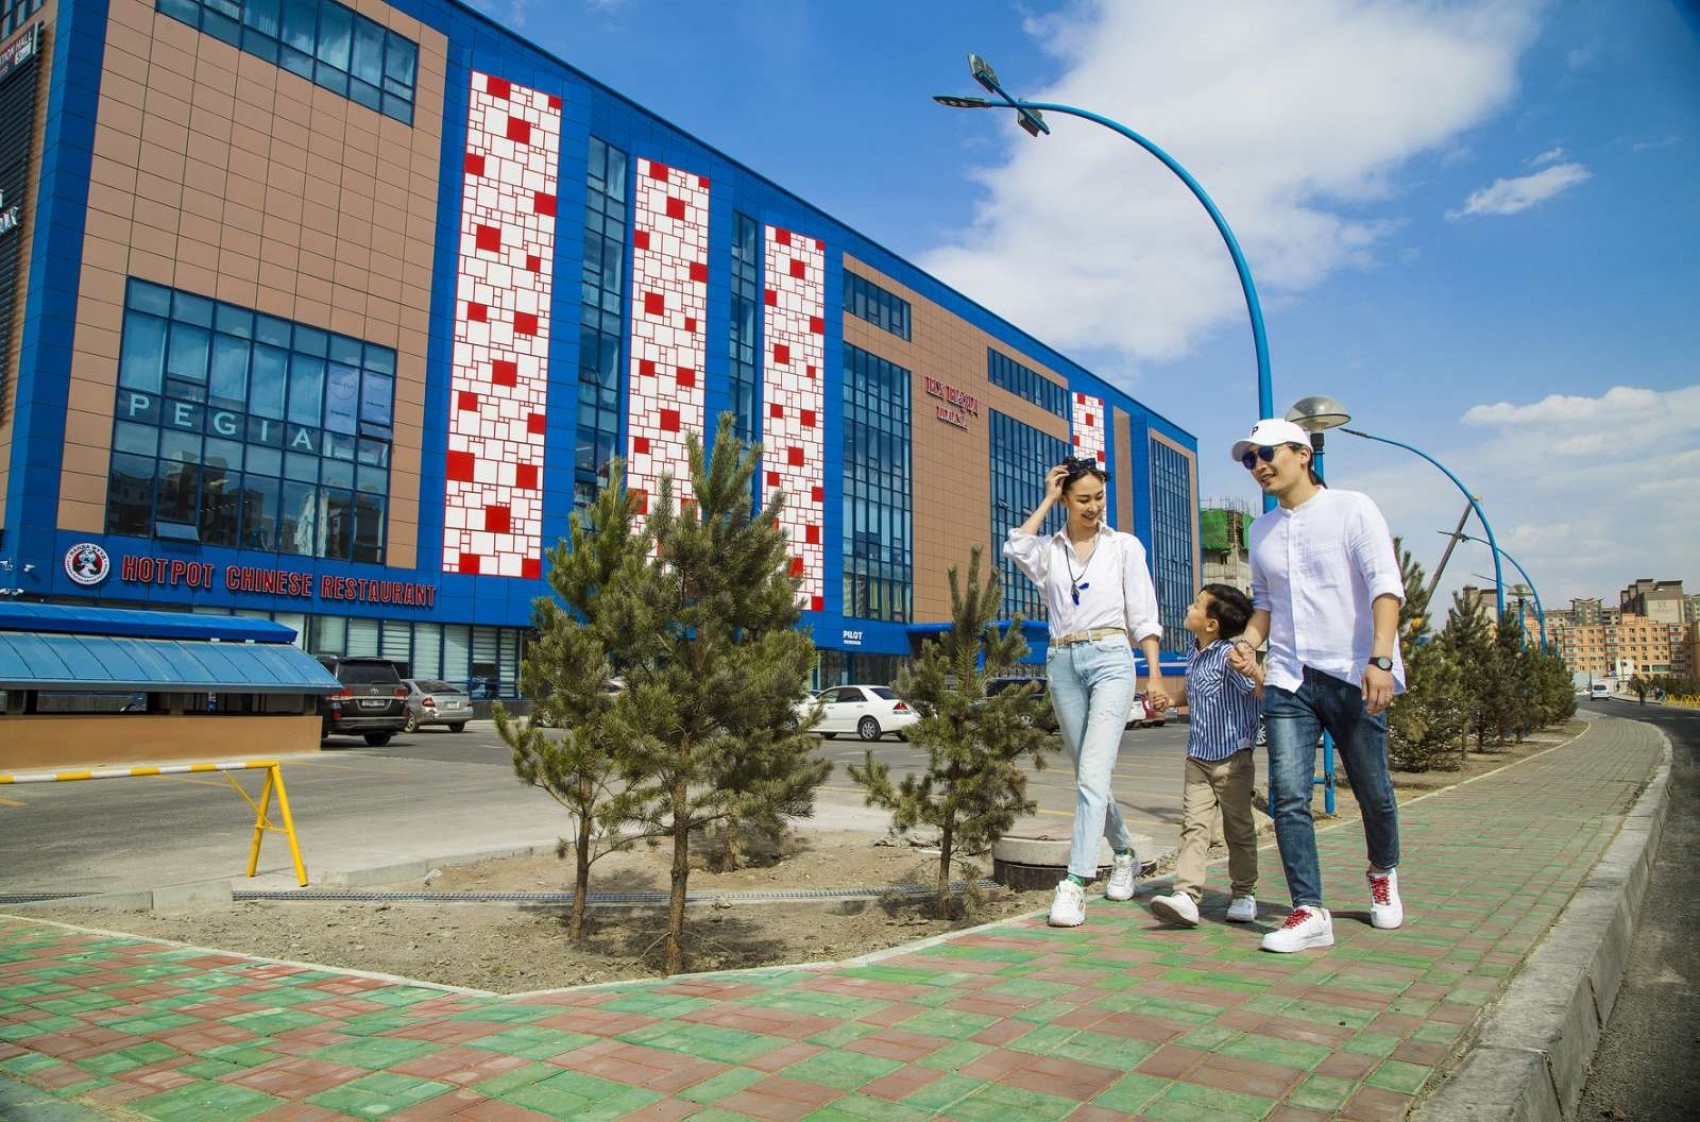 Ulaanbaatar Properties